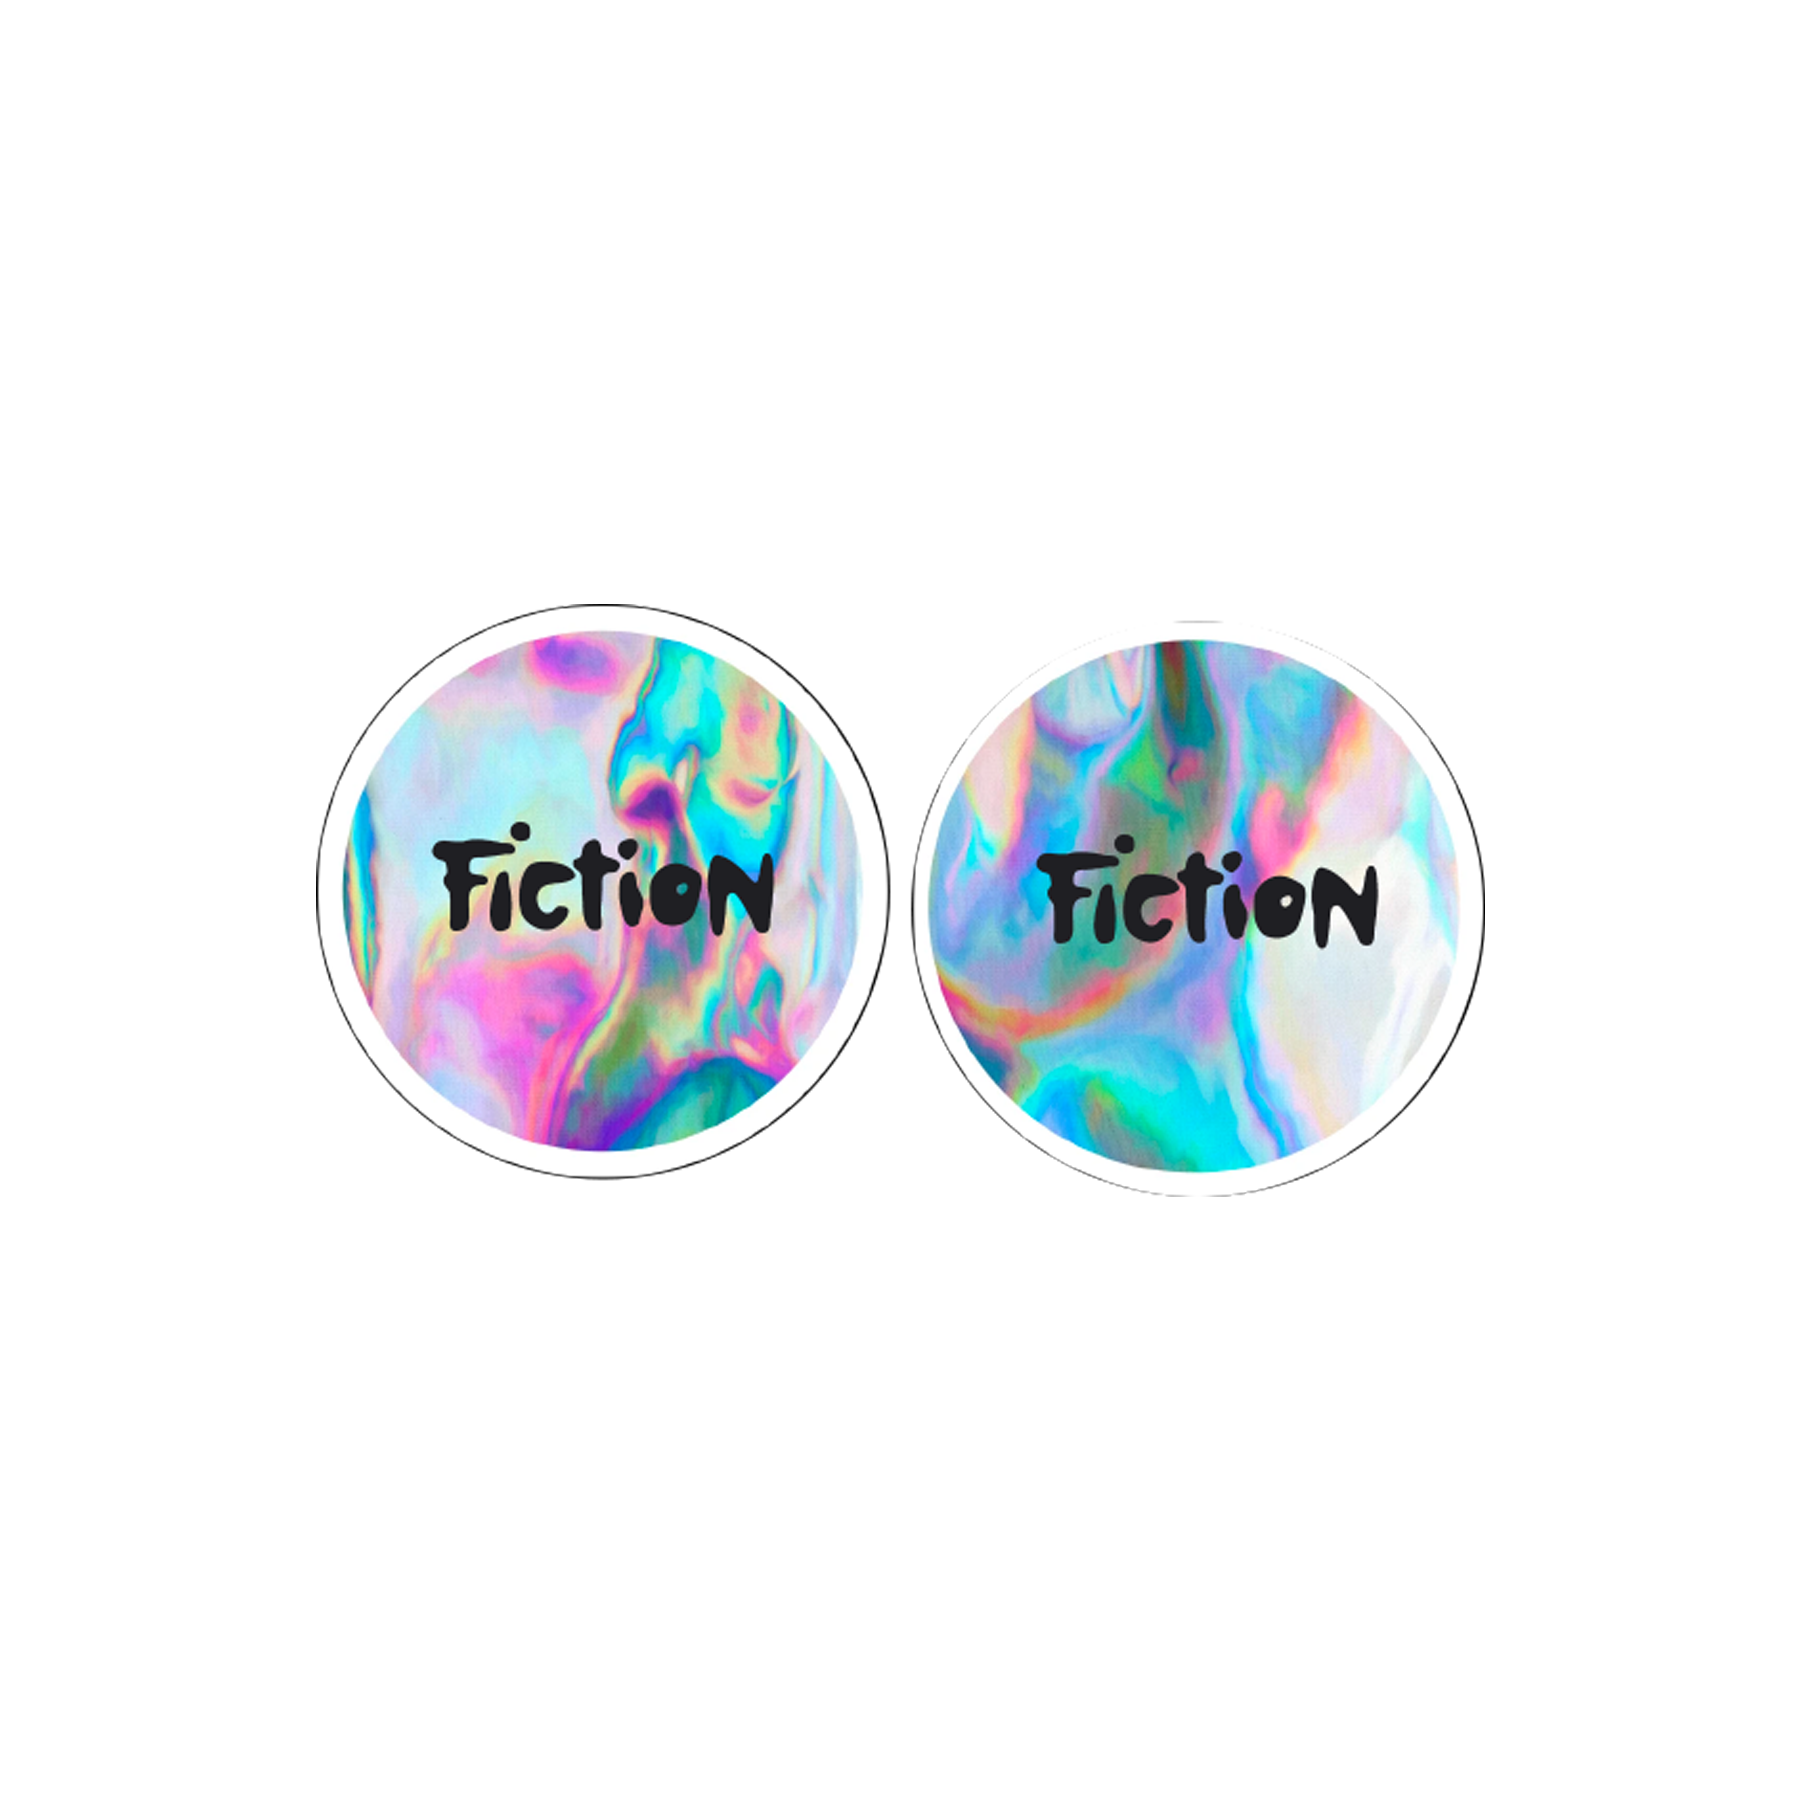 Fiction - Circular Rainbow Foil Sticker Pack